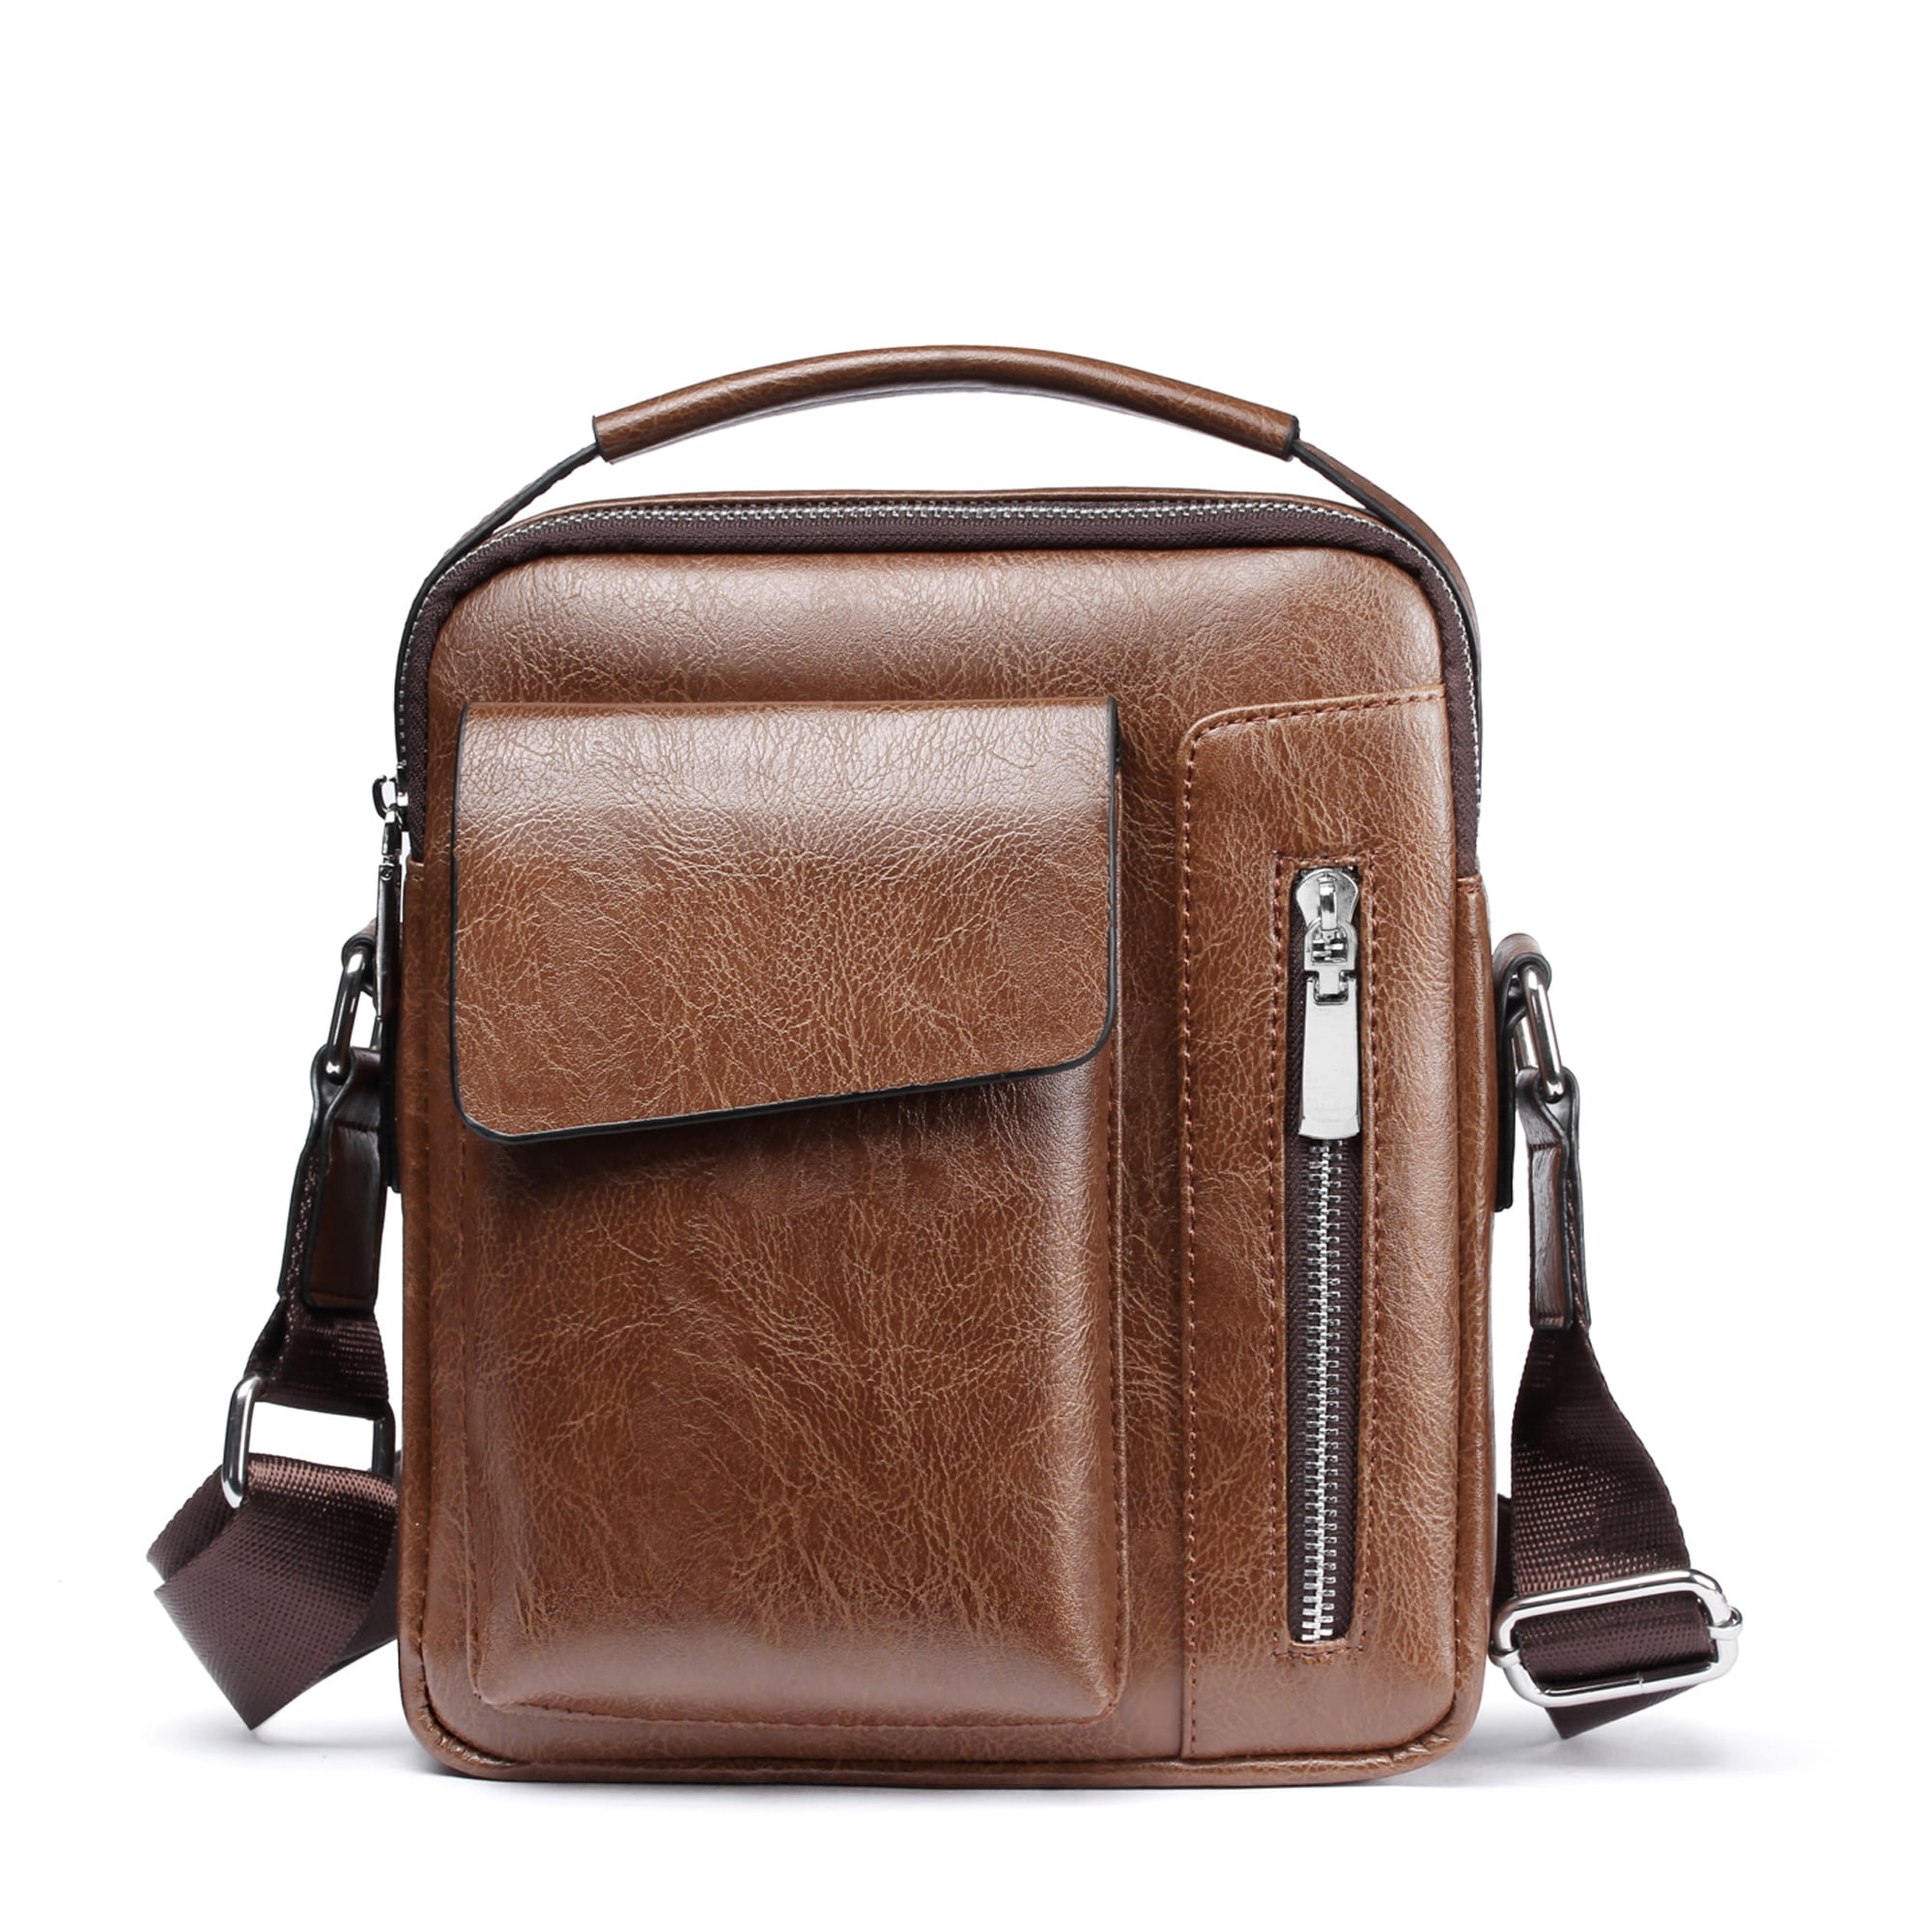 Leather Crossbody Bag for Men Small Shoulder Messenger Bags Side Man Purse  Handbag for iPad 7.9 Travel Work Business Brown 